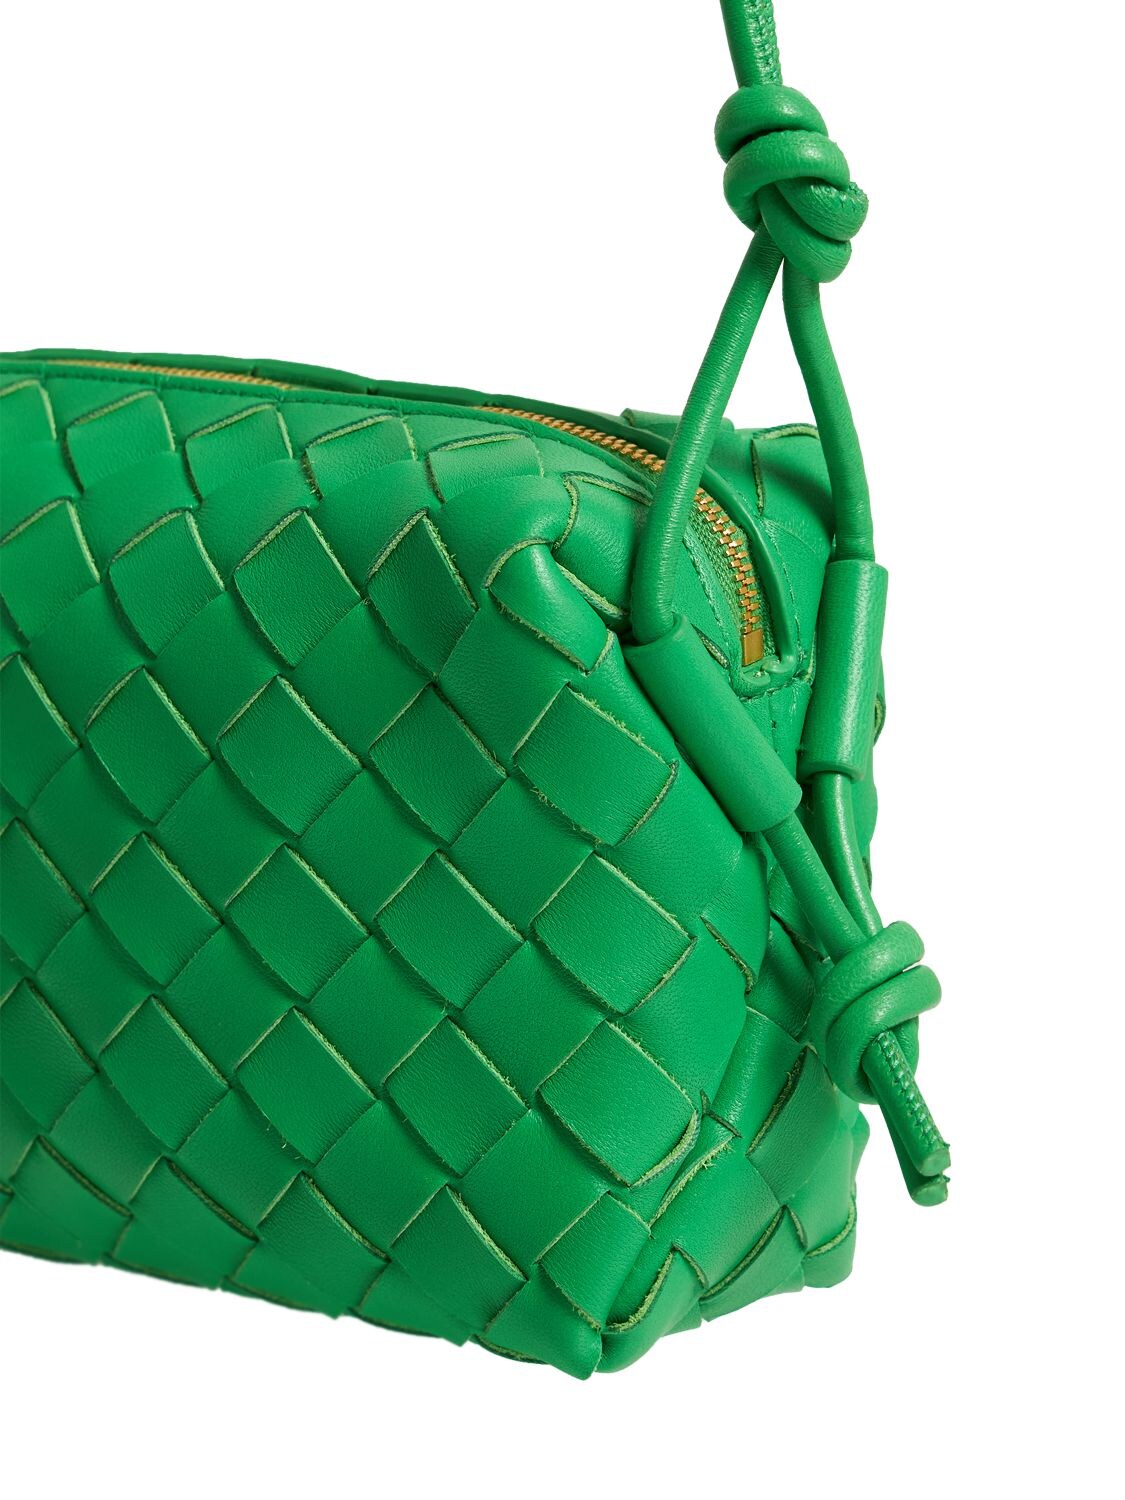 Bottega Veneta Point Shoulder Bag Braided Leather Small Green 2180131